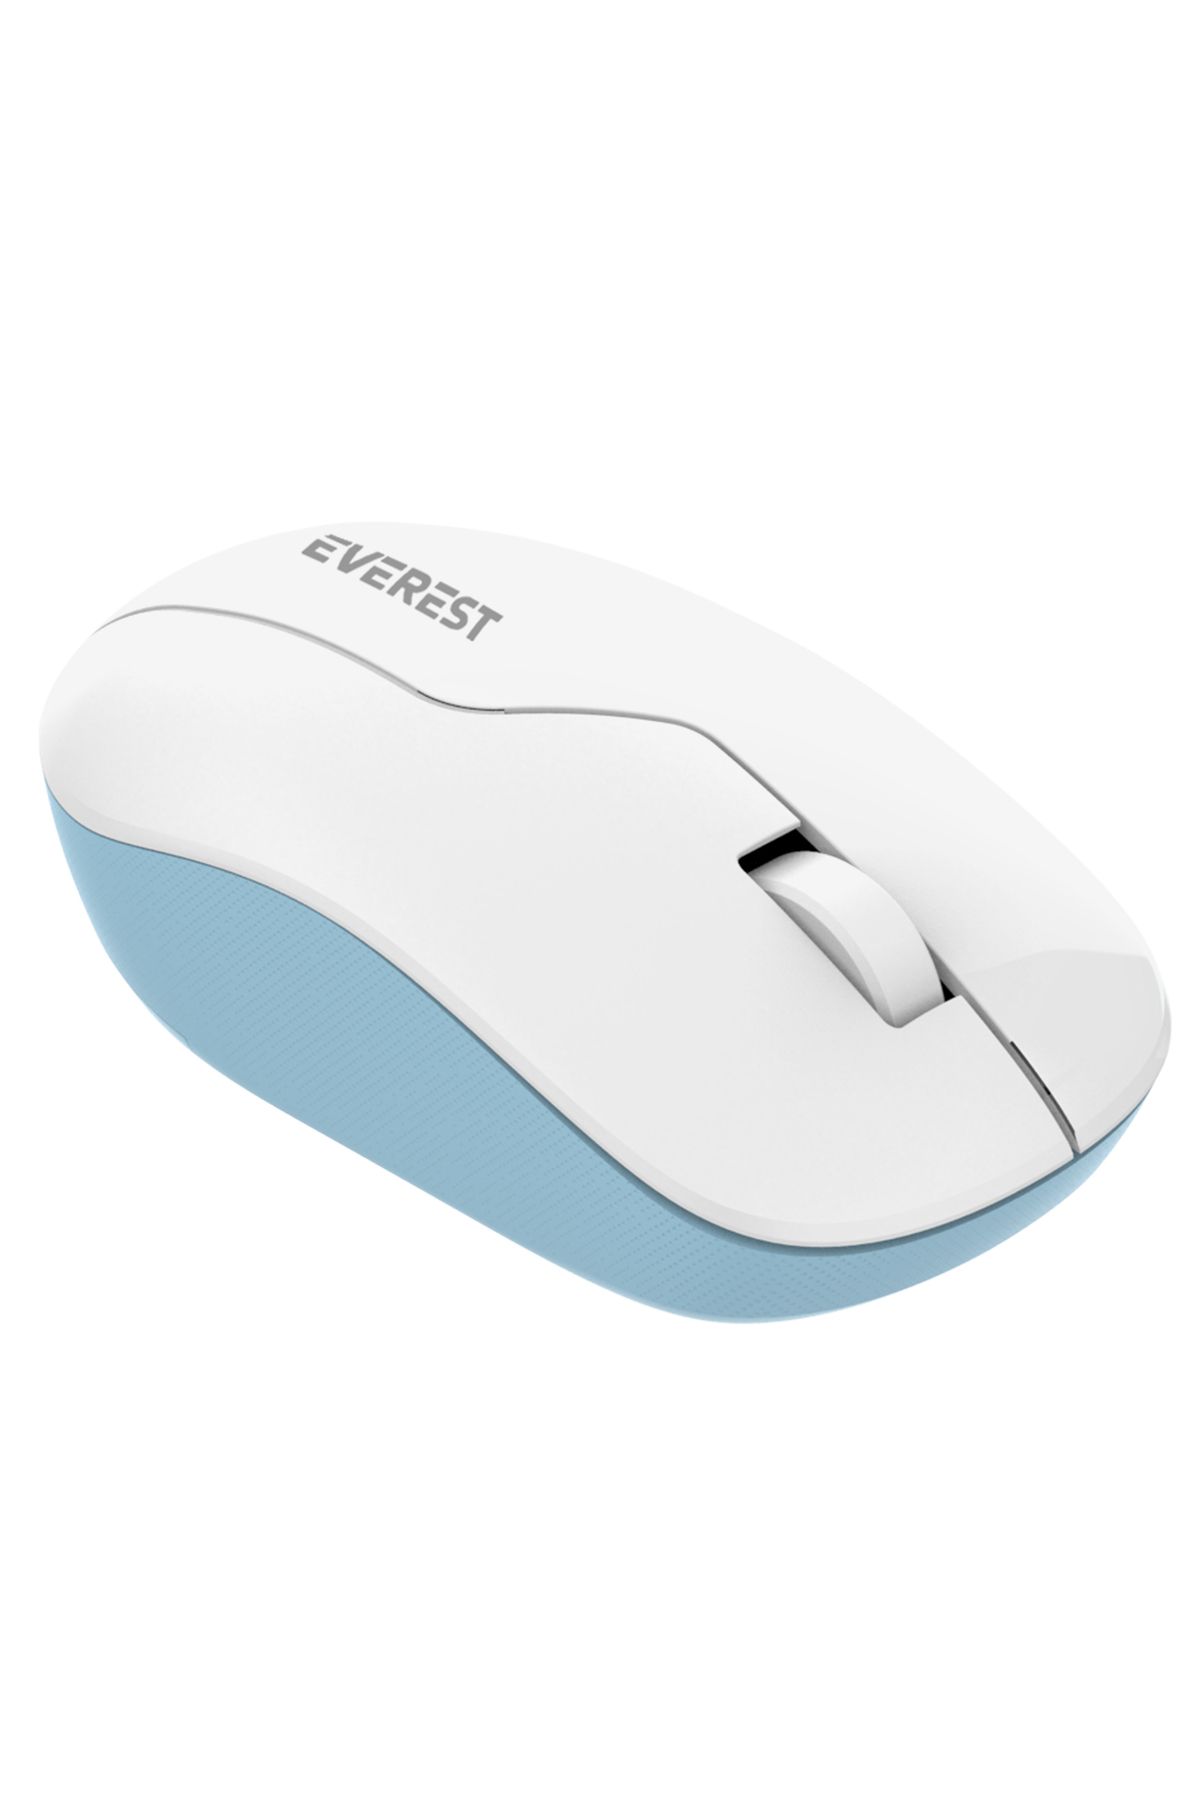 Everest SMW-973 Usb Beyaz/Mavi 2.4Ghz Kablosuz Mouse